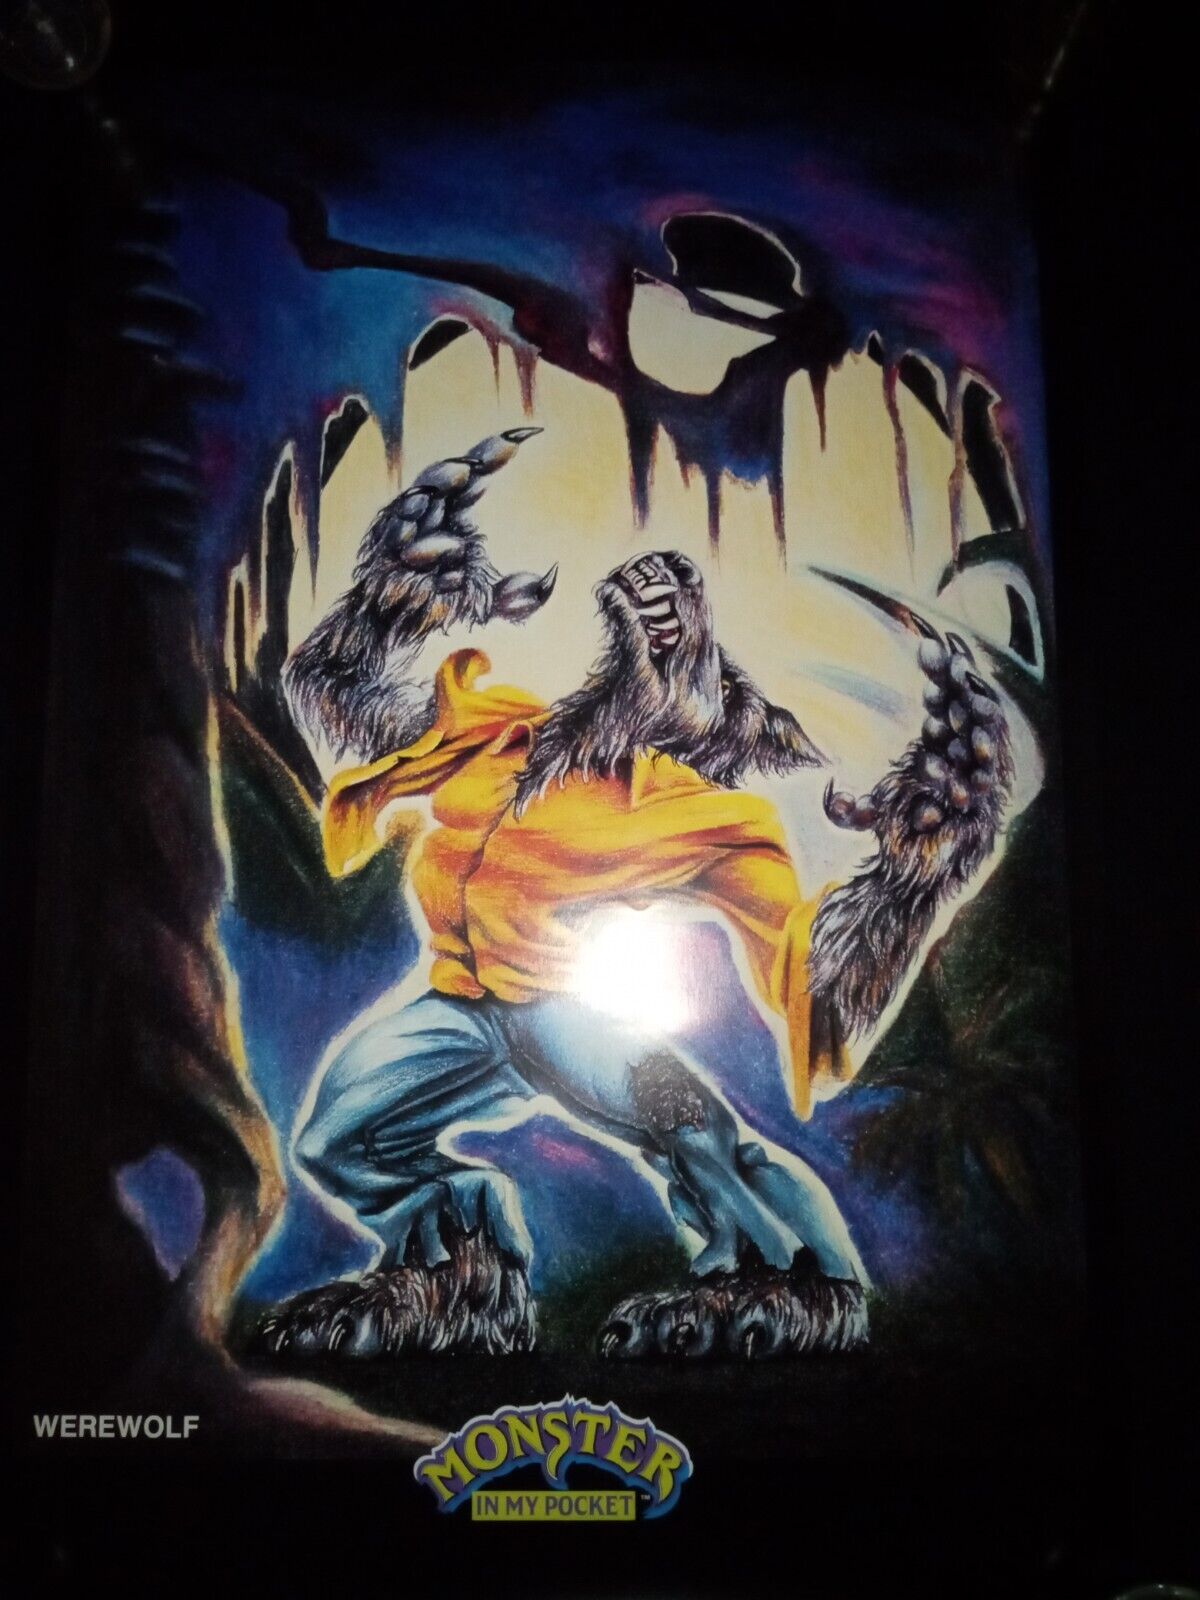 Monster in My Pocket Werewolf Poster 24 x 32 RARE